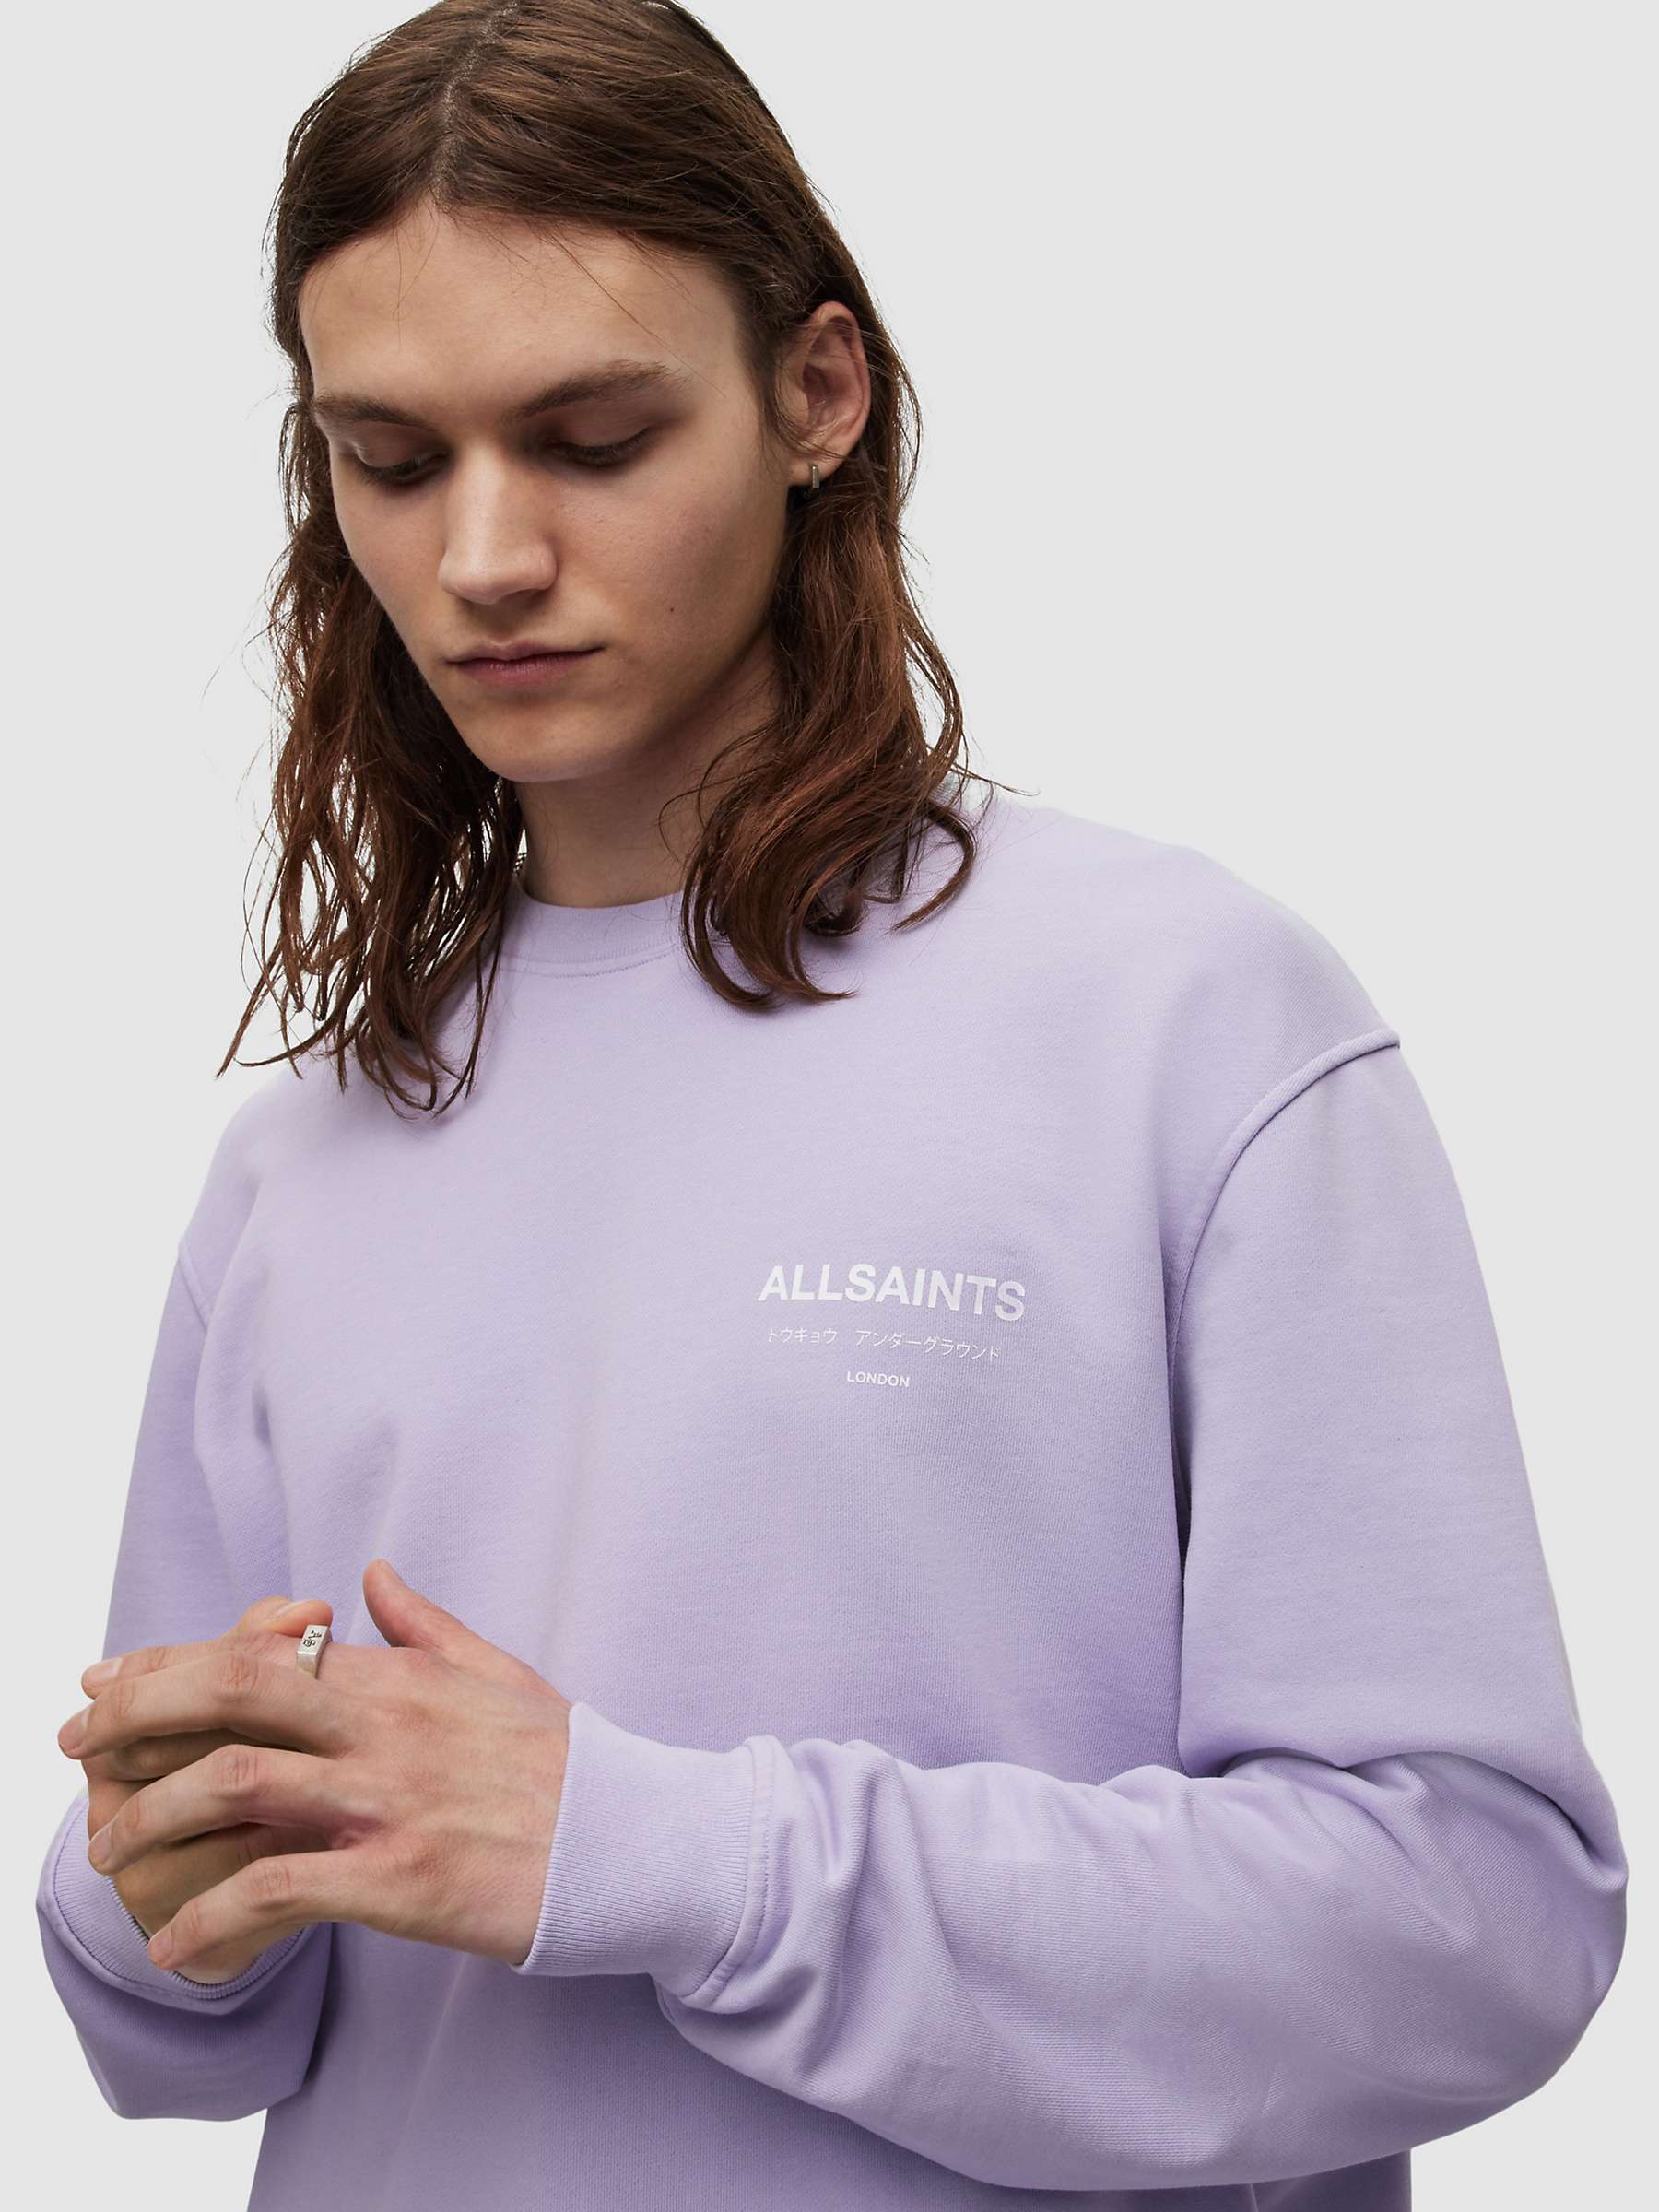 AllSaints Underground Crew Neck Sweatshirt, Lavndr Lilac/White at John ...